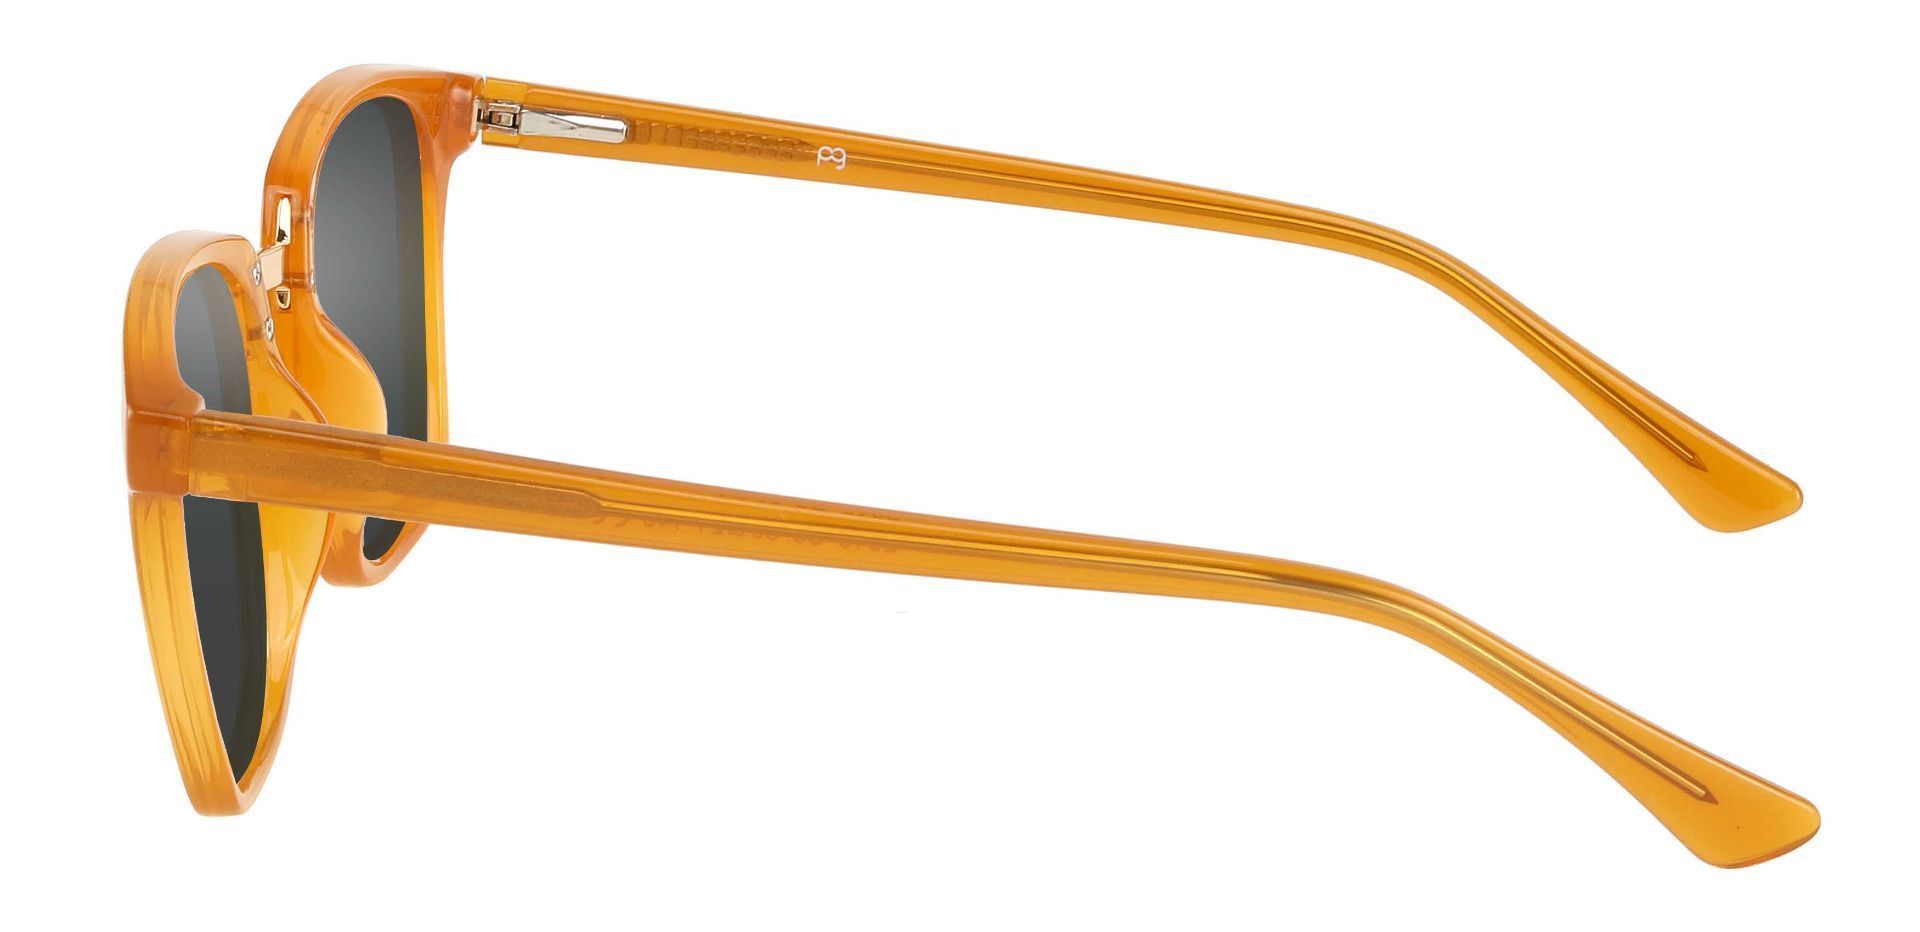 Delta Square Reading Sunglasses - Orange Frame With Gray Lenses